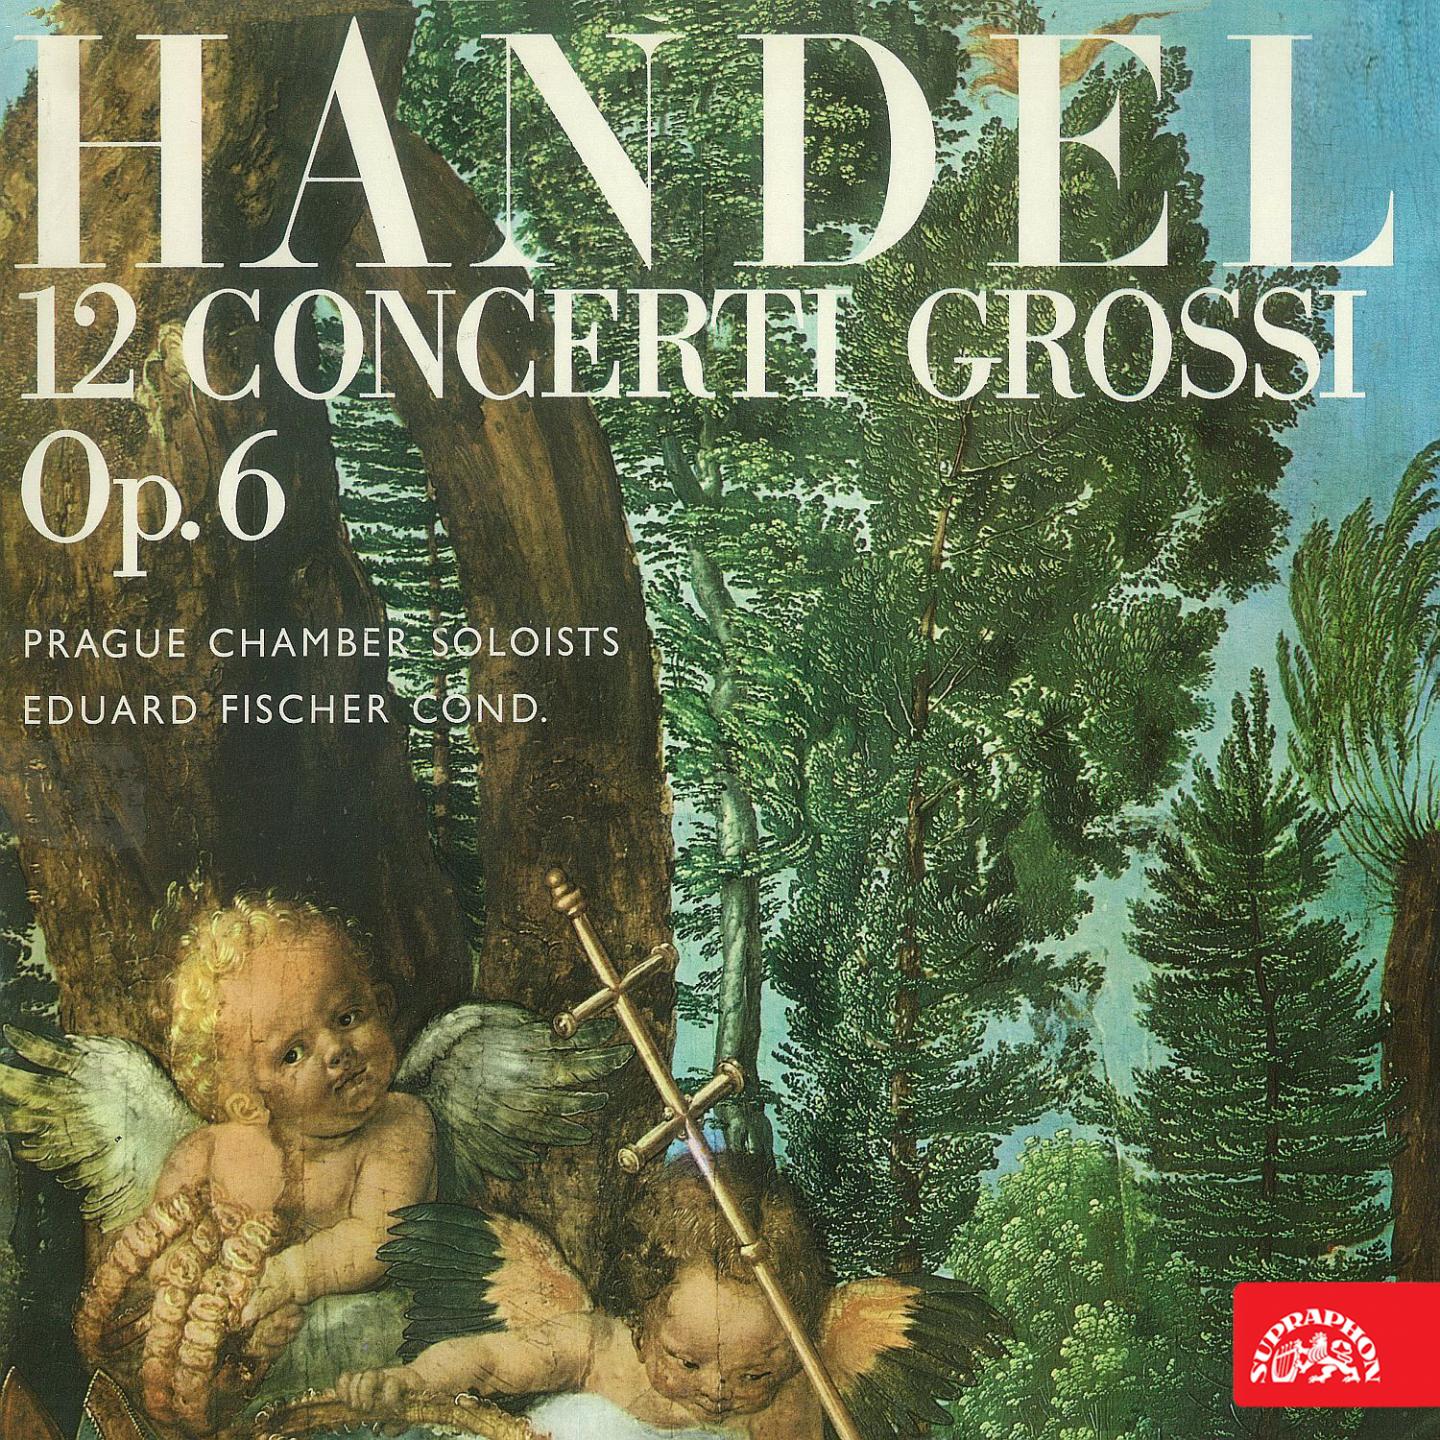 12 Concerti grossi, Op. 6, No. 12 in B Minor, HWV 330: I. Largo